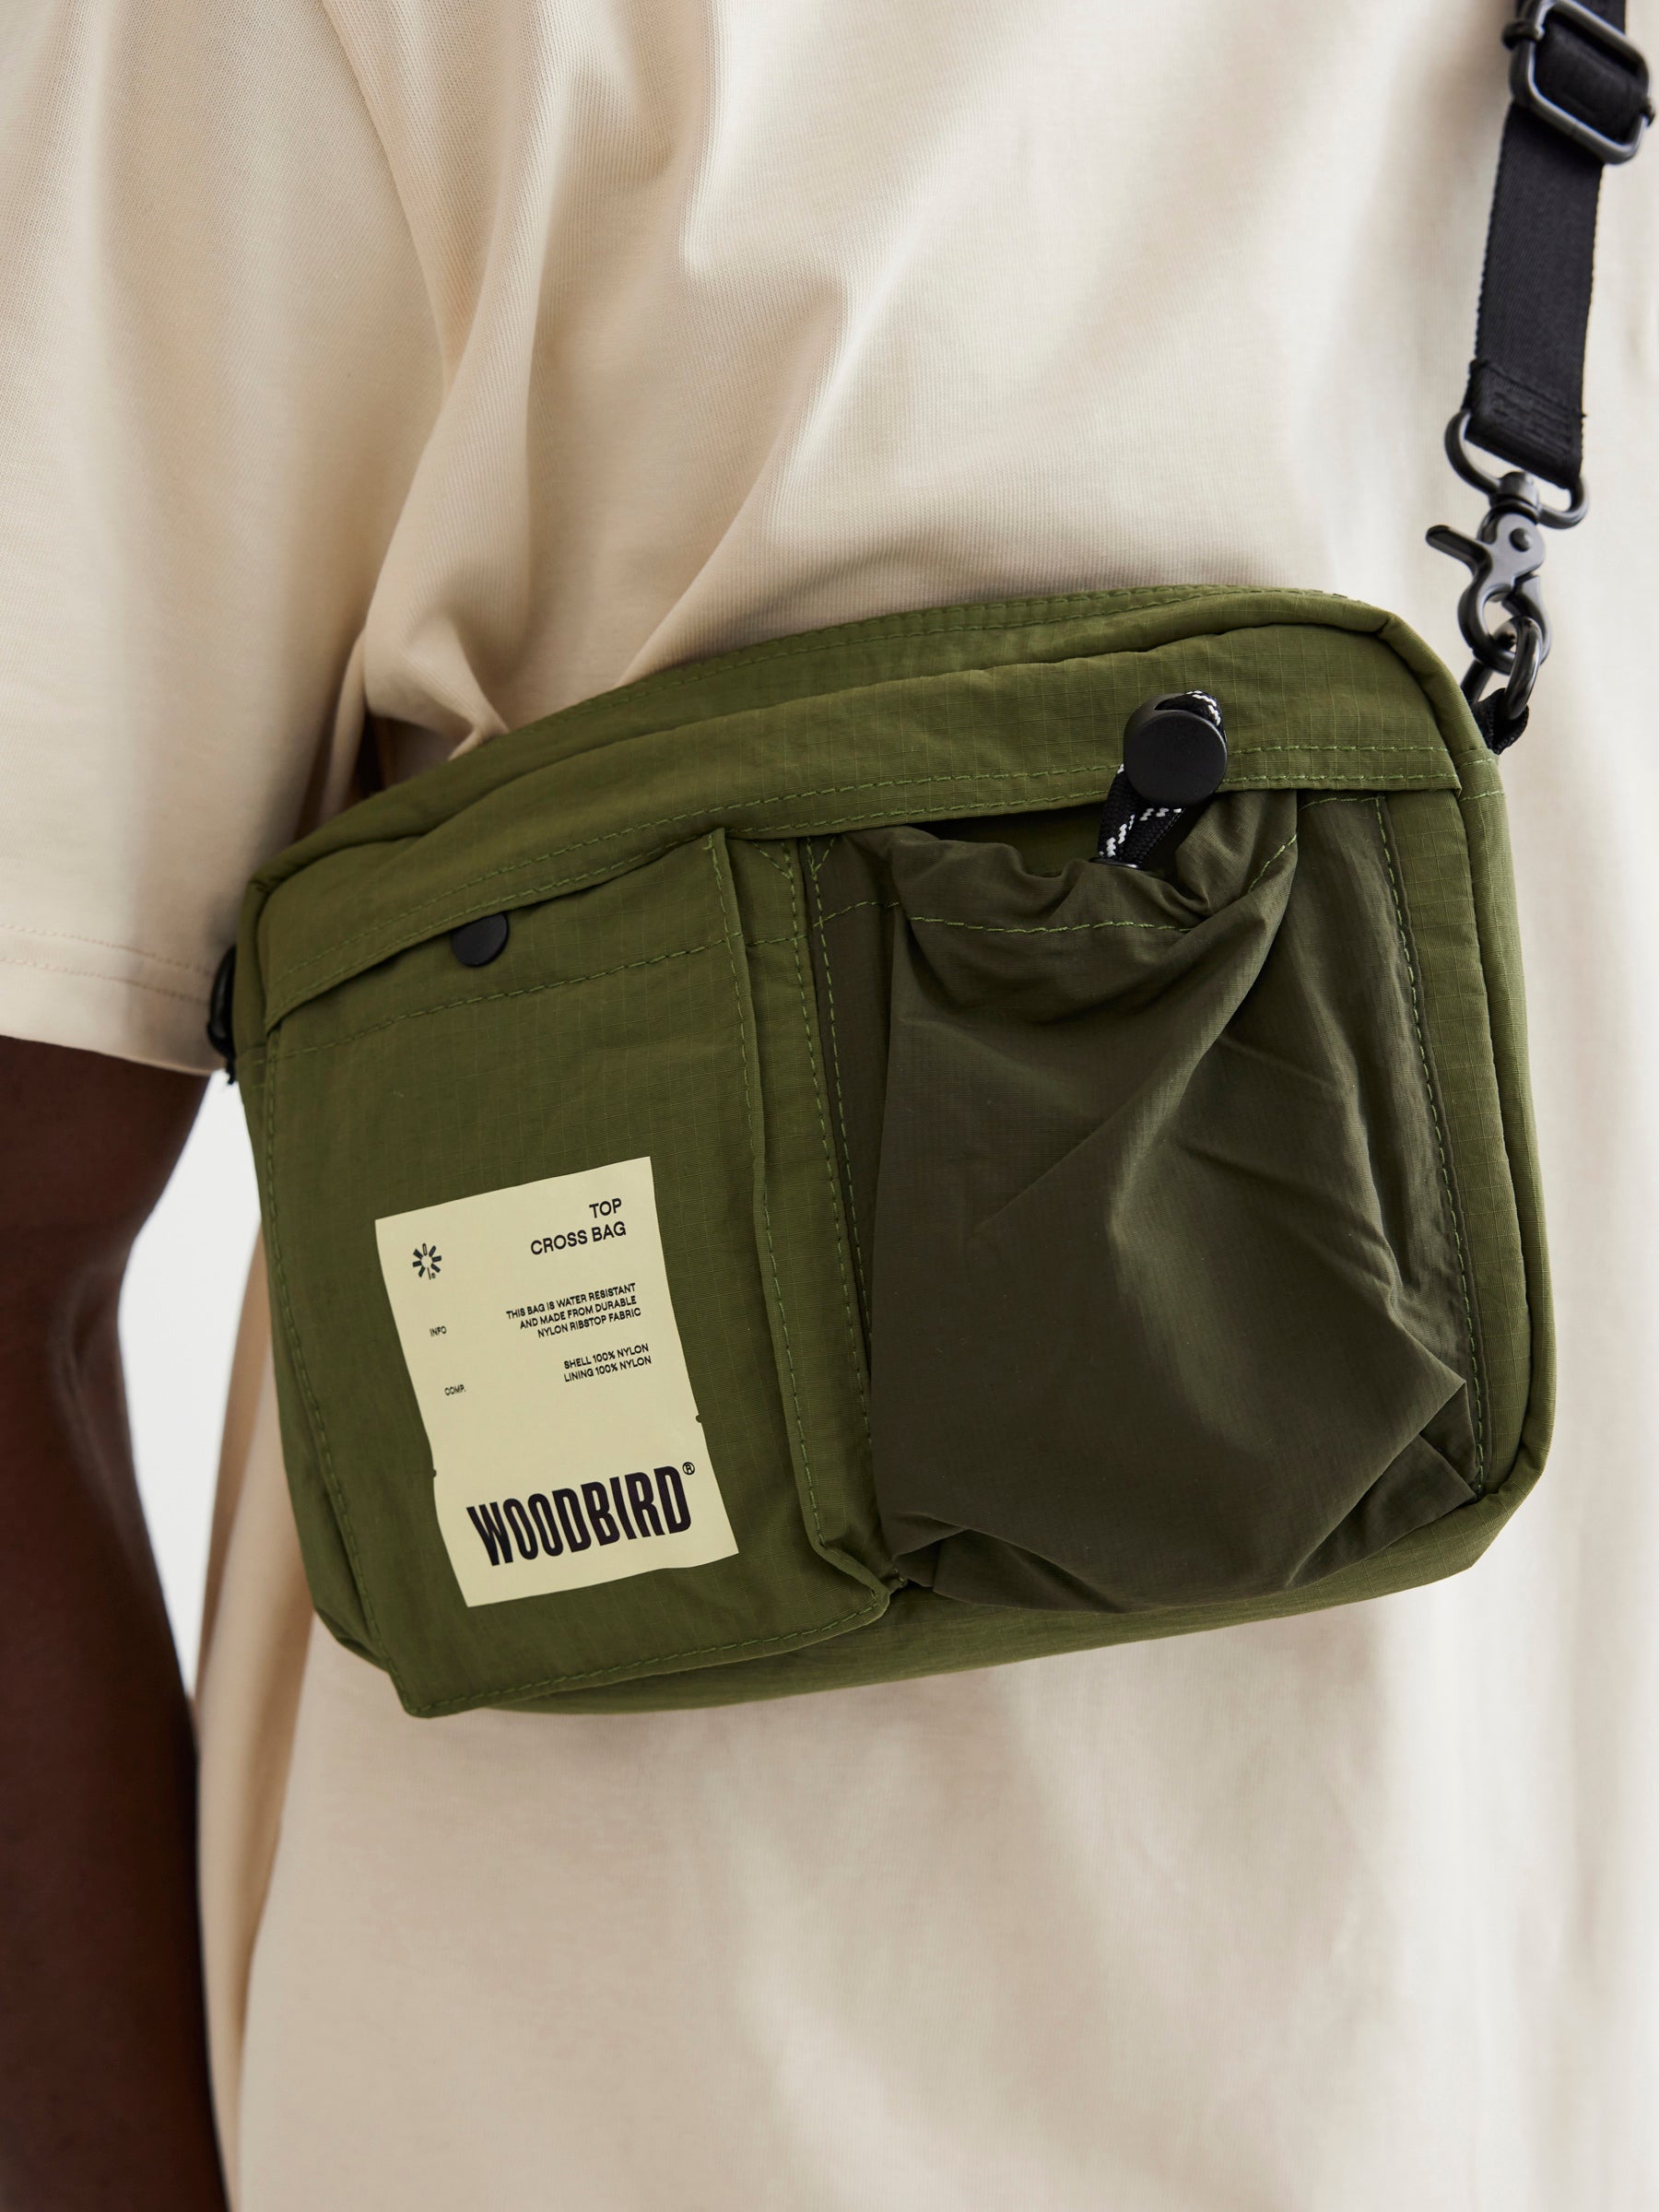 Woodbird Top cross bag Accessories Army Green